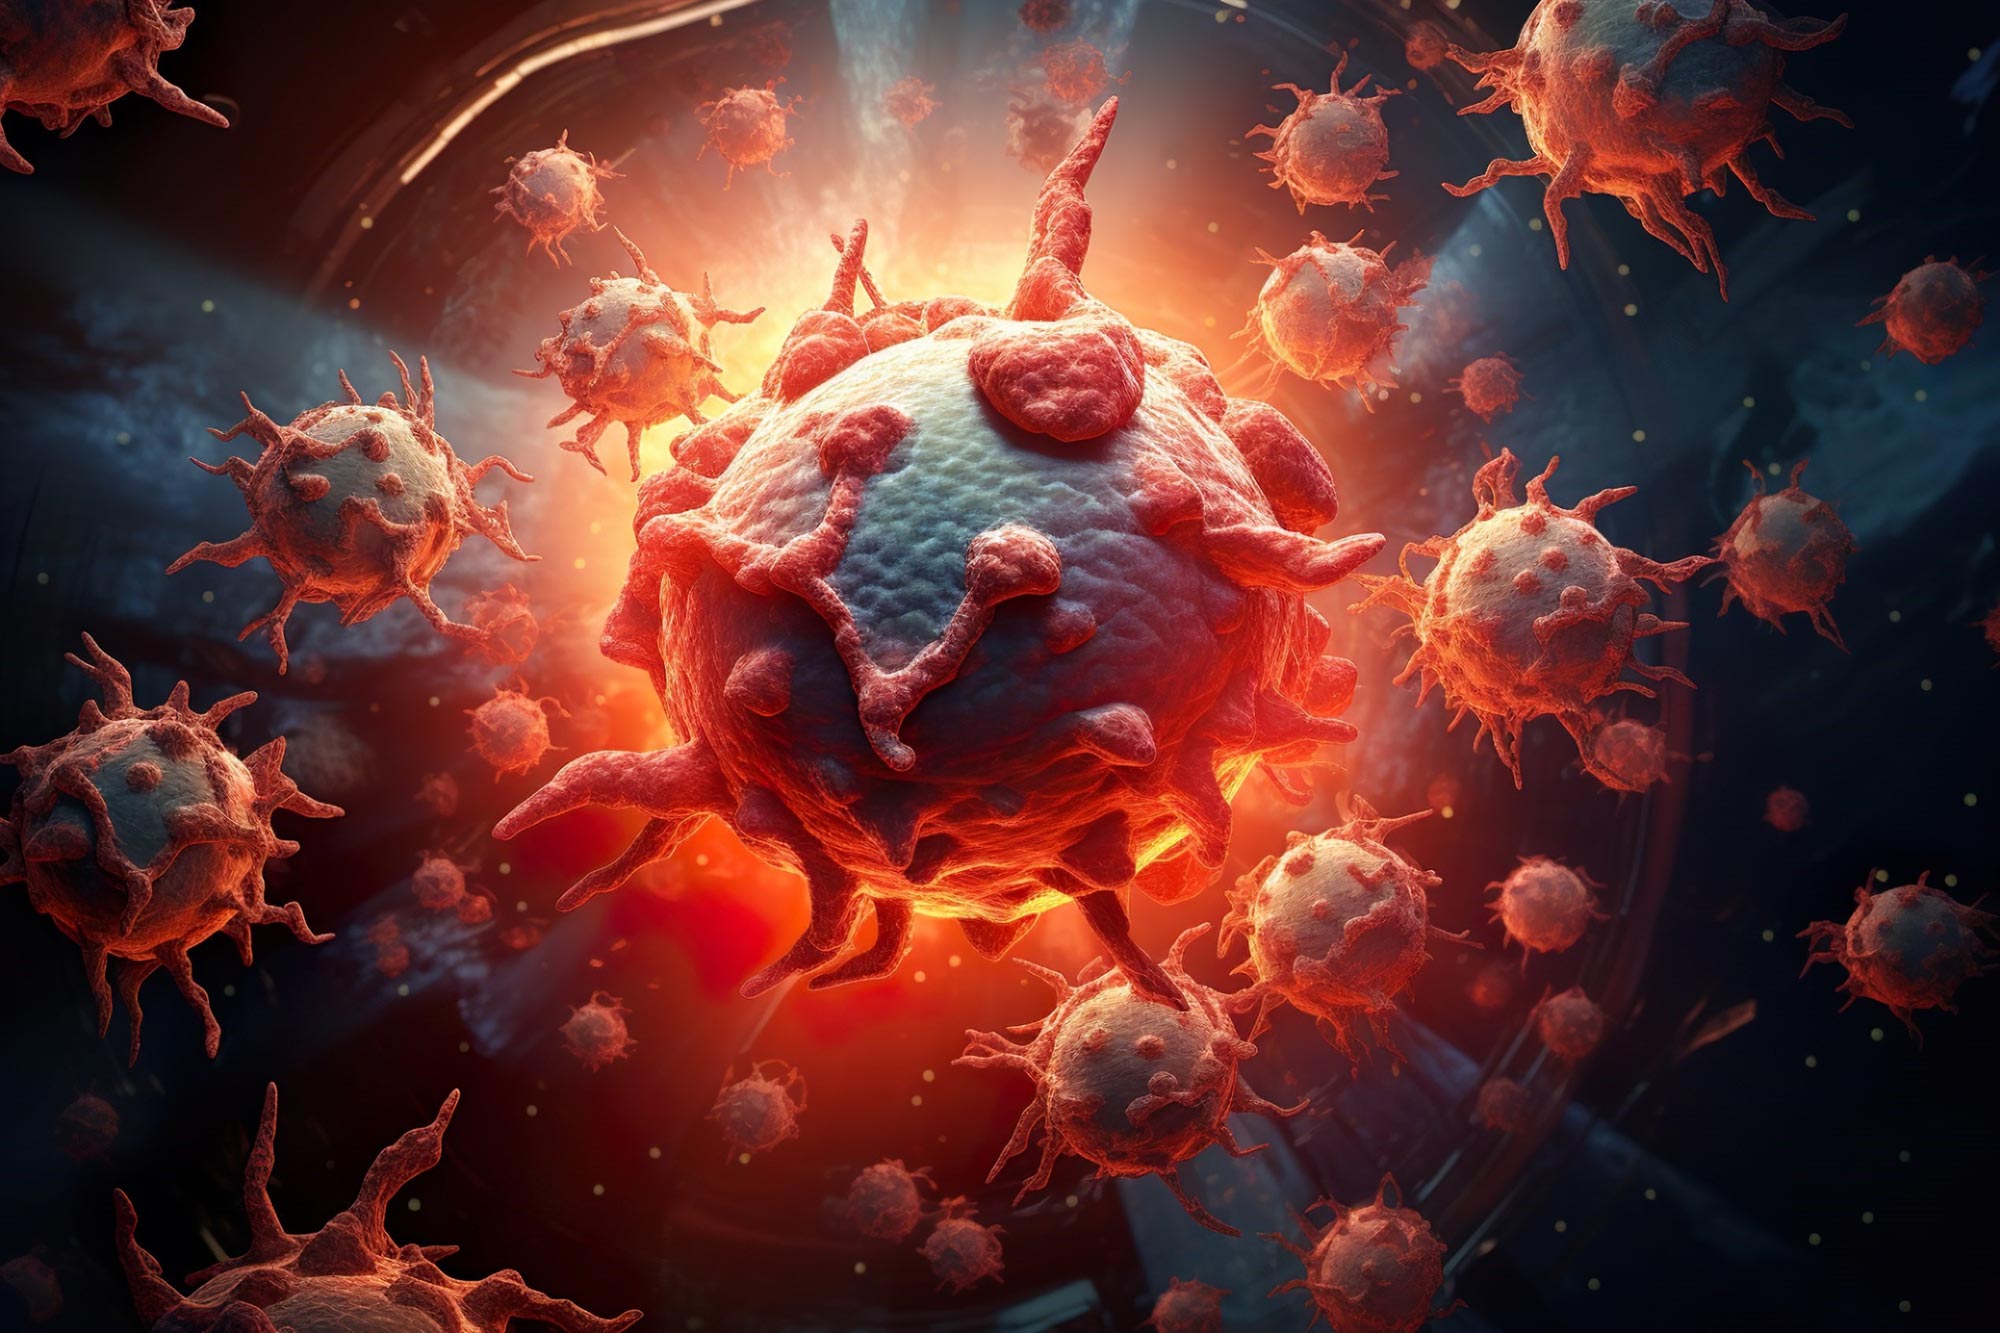 Concept art of destroying cancer cells